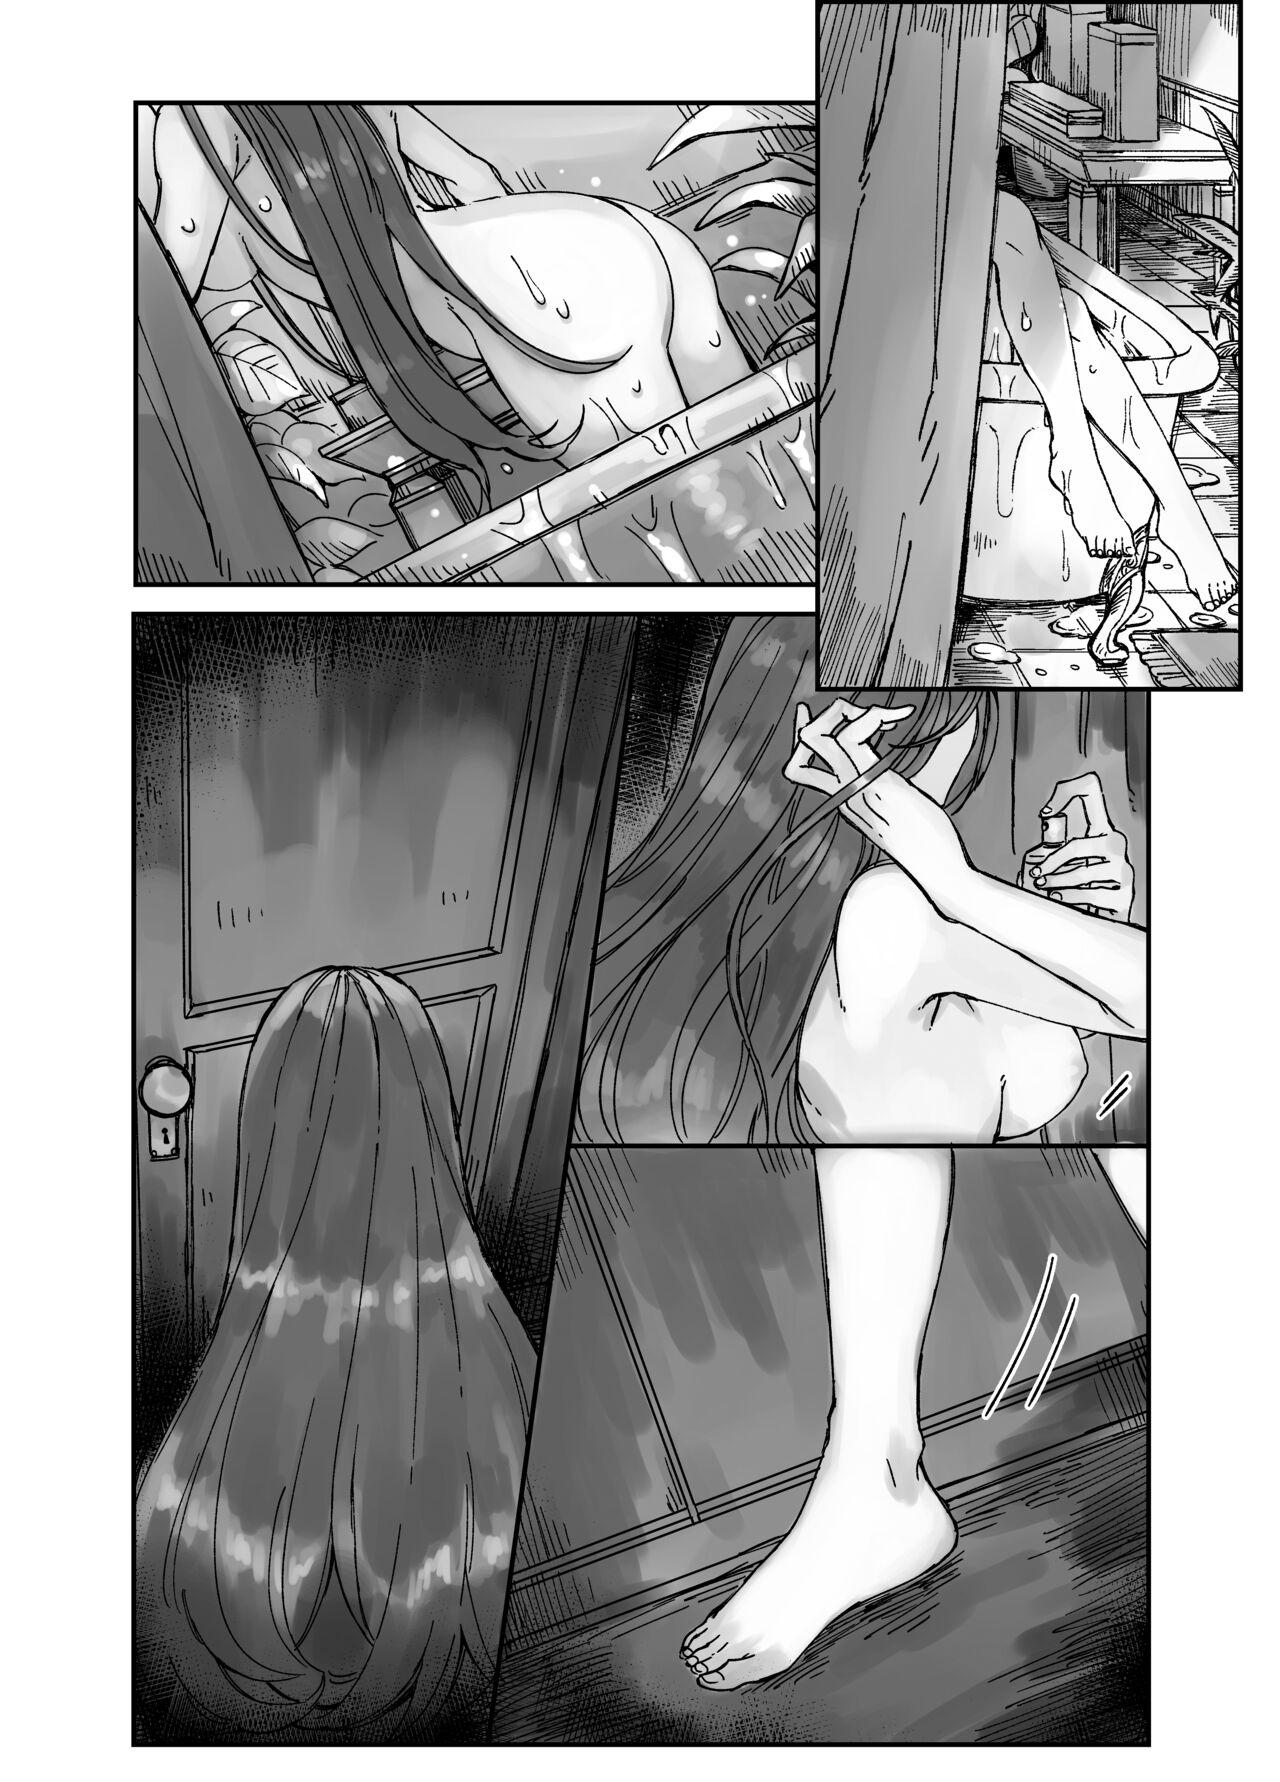 Nalgas Skeb Request Manga - Original Blows - Page 1